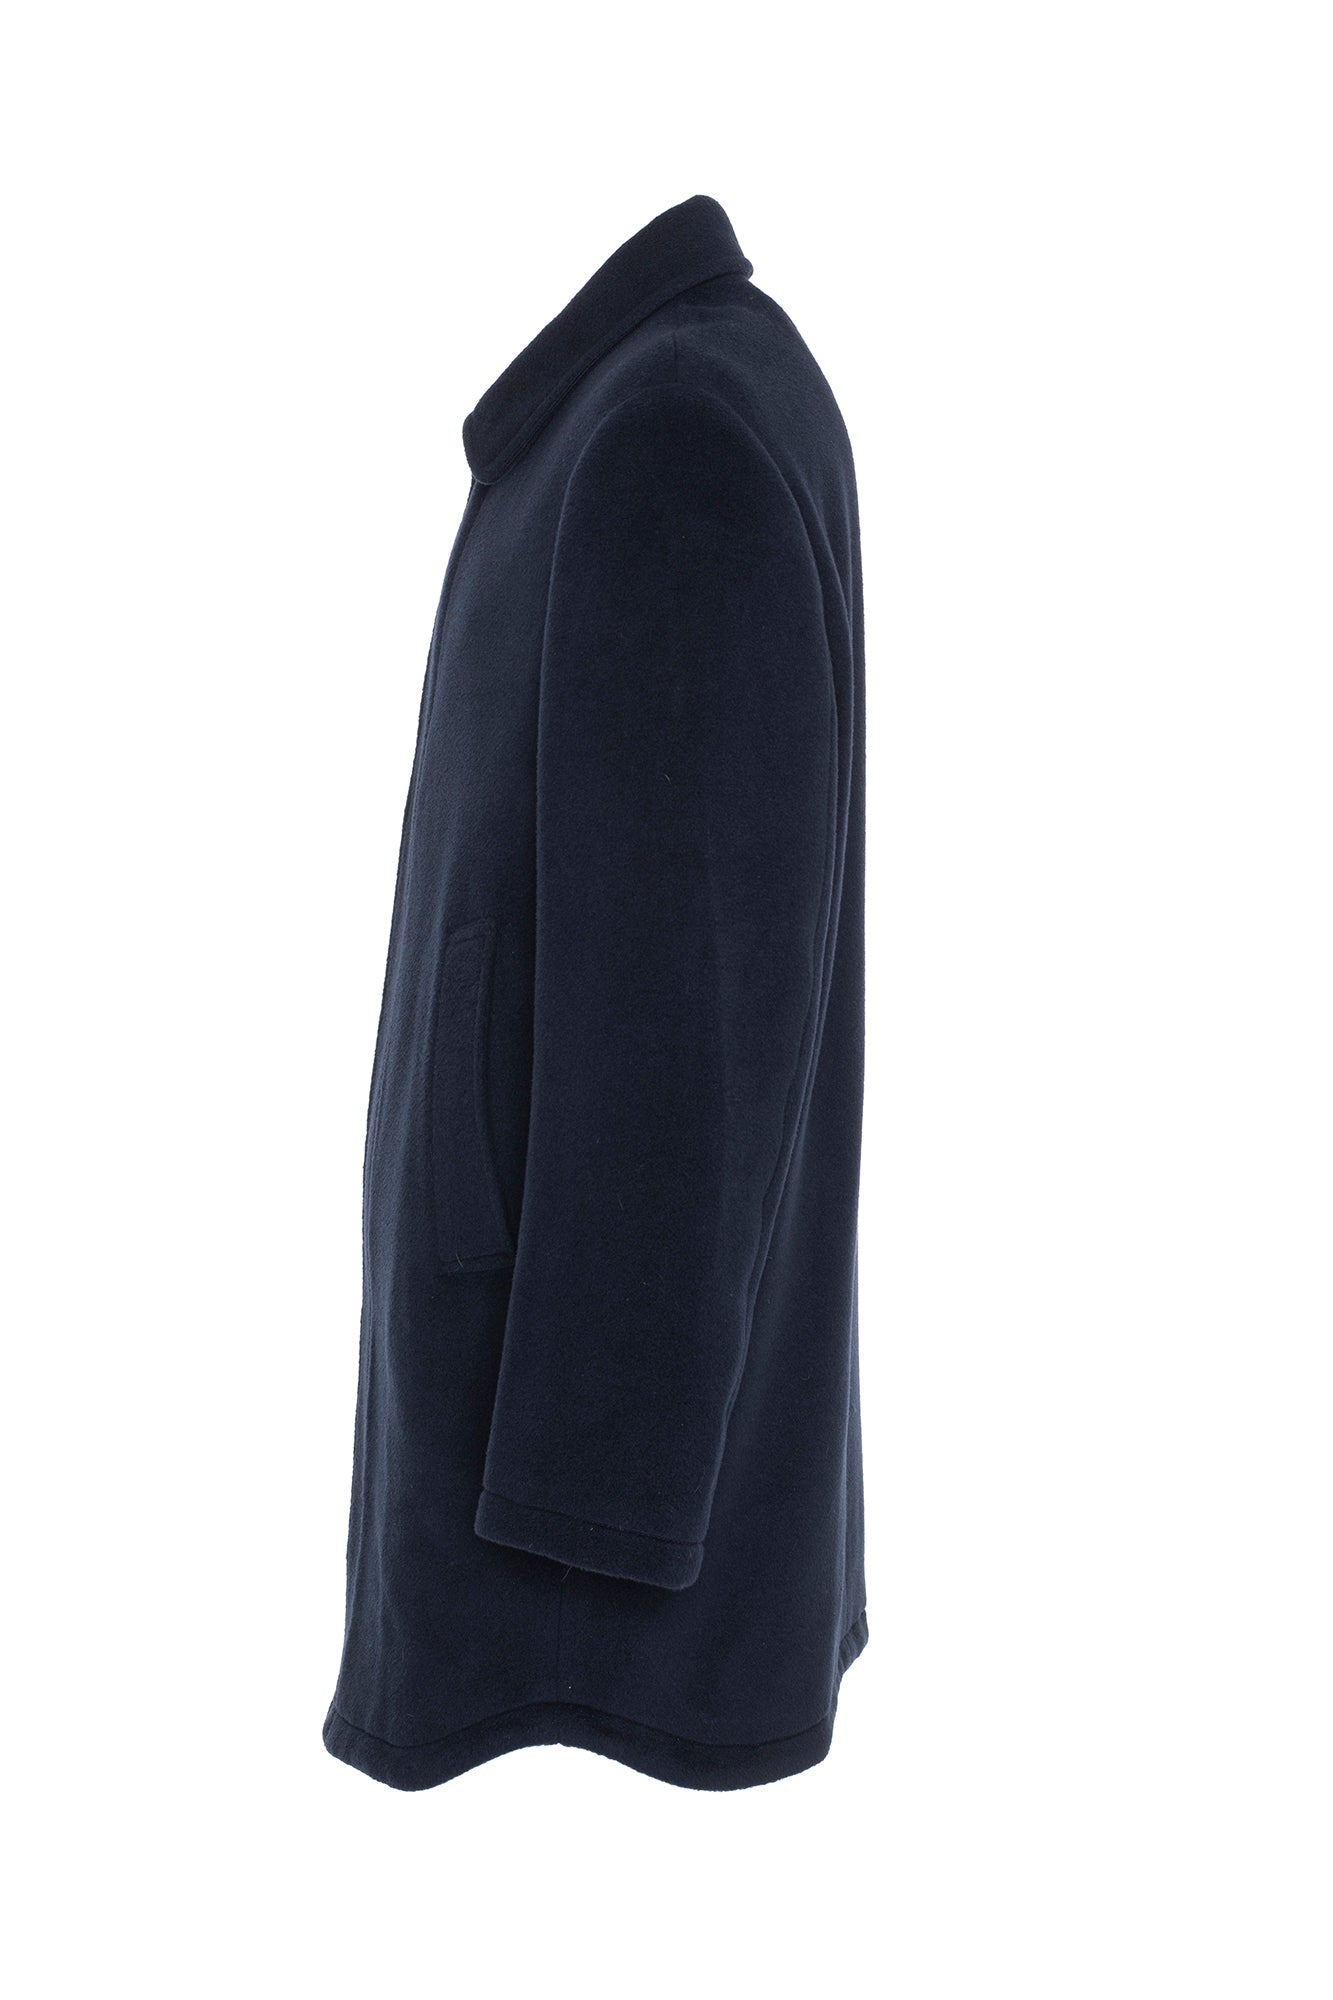 SODA NAVY WOOL TOPCOAT - MENS - Cardinal of Canada-US-Soda - navy wool topcoat 36 inch length